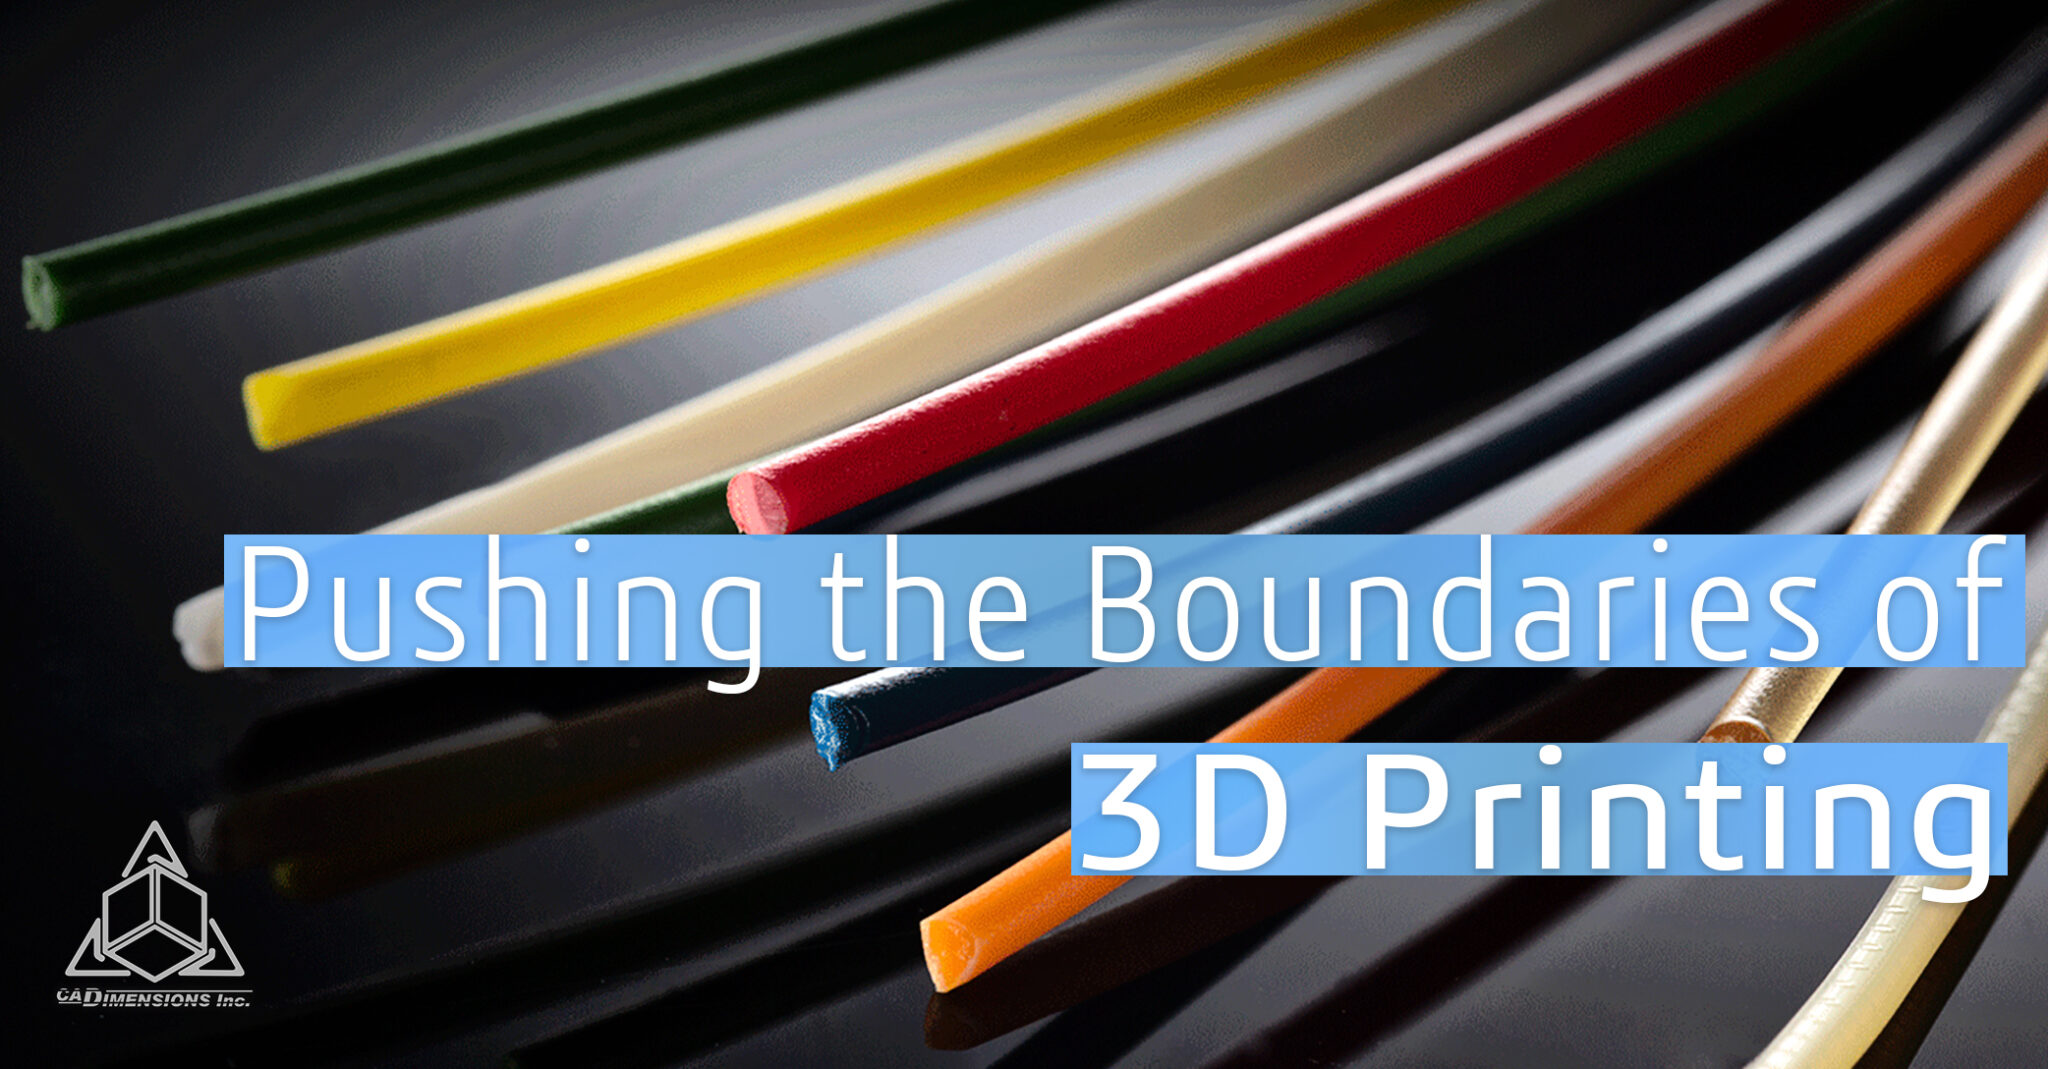 New Materials Push Boundaries of High-Performance 3D Printing